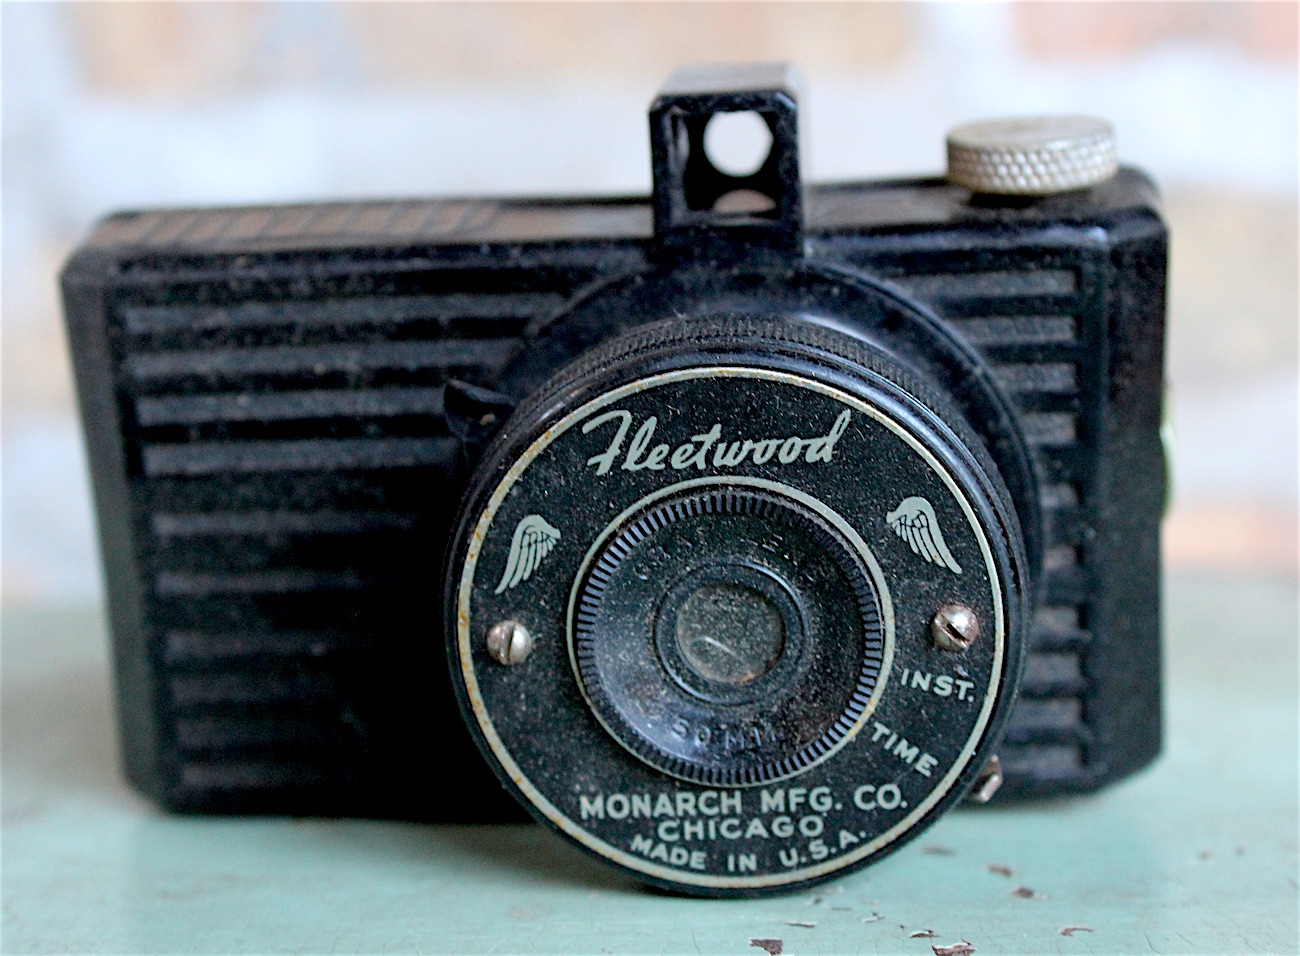 Fleetwood Miniature Bakelite Camera by Monarch MFG Co., c. 1940